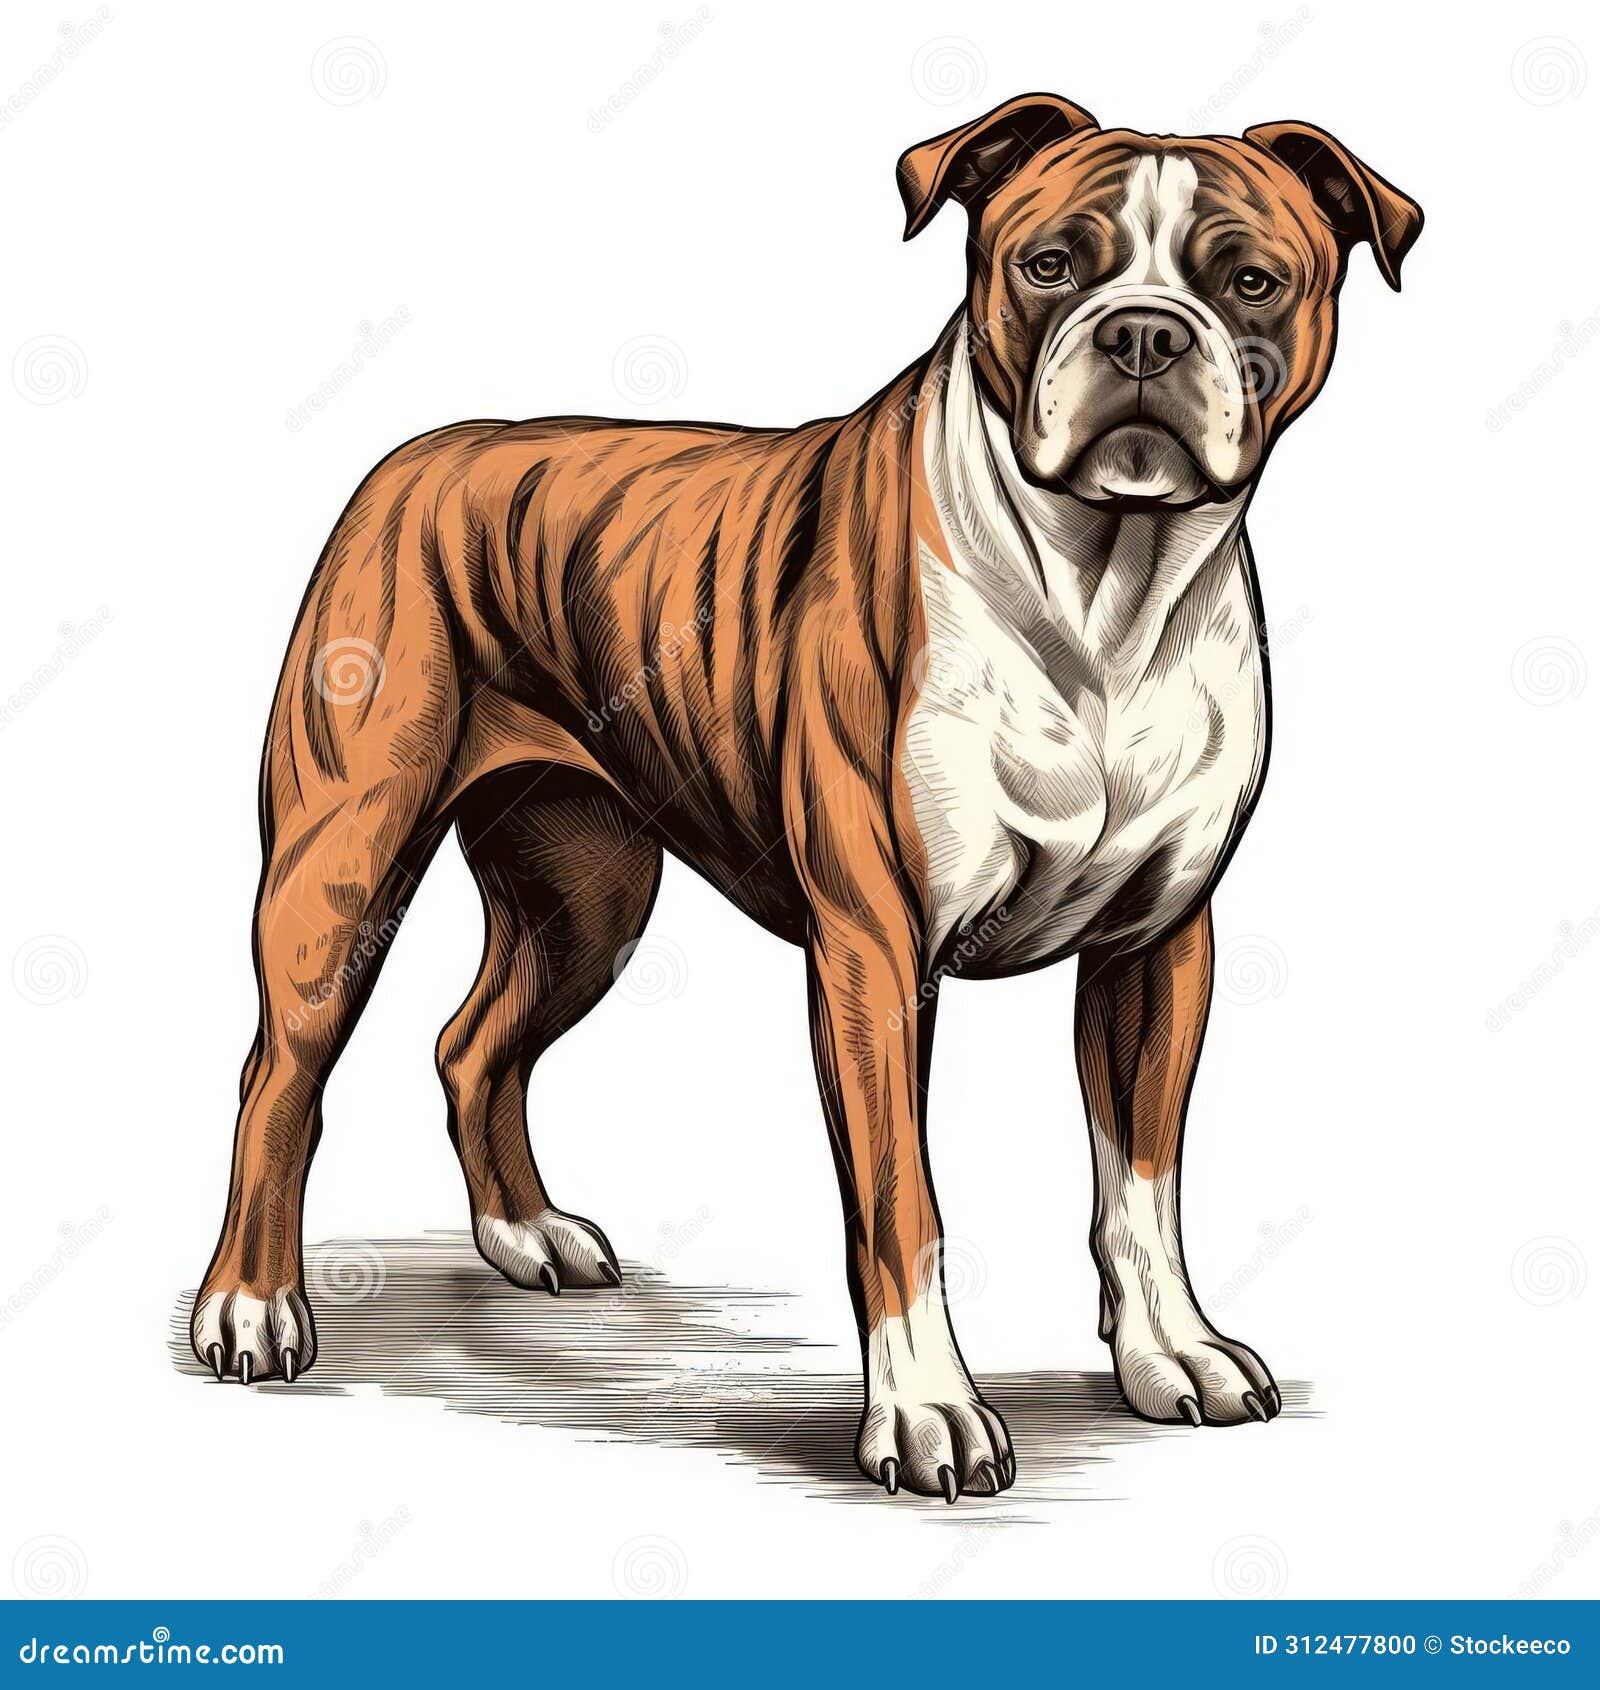 realistic boxer dog portrait in high-contrast gravure print